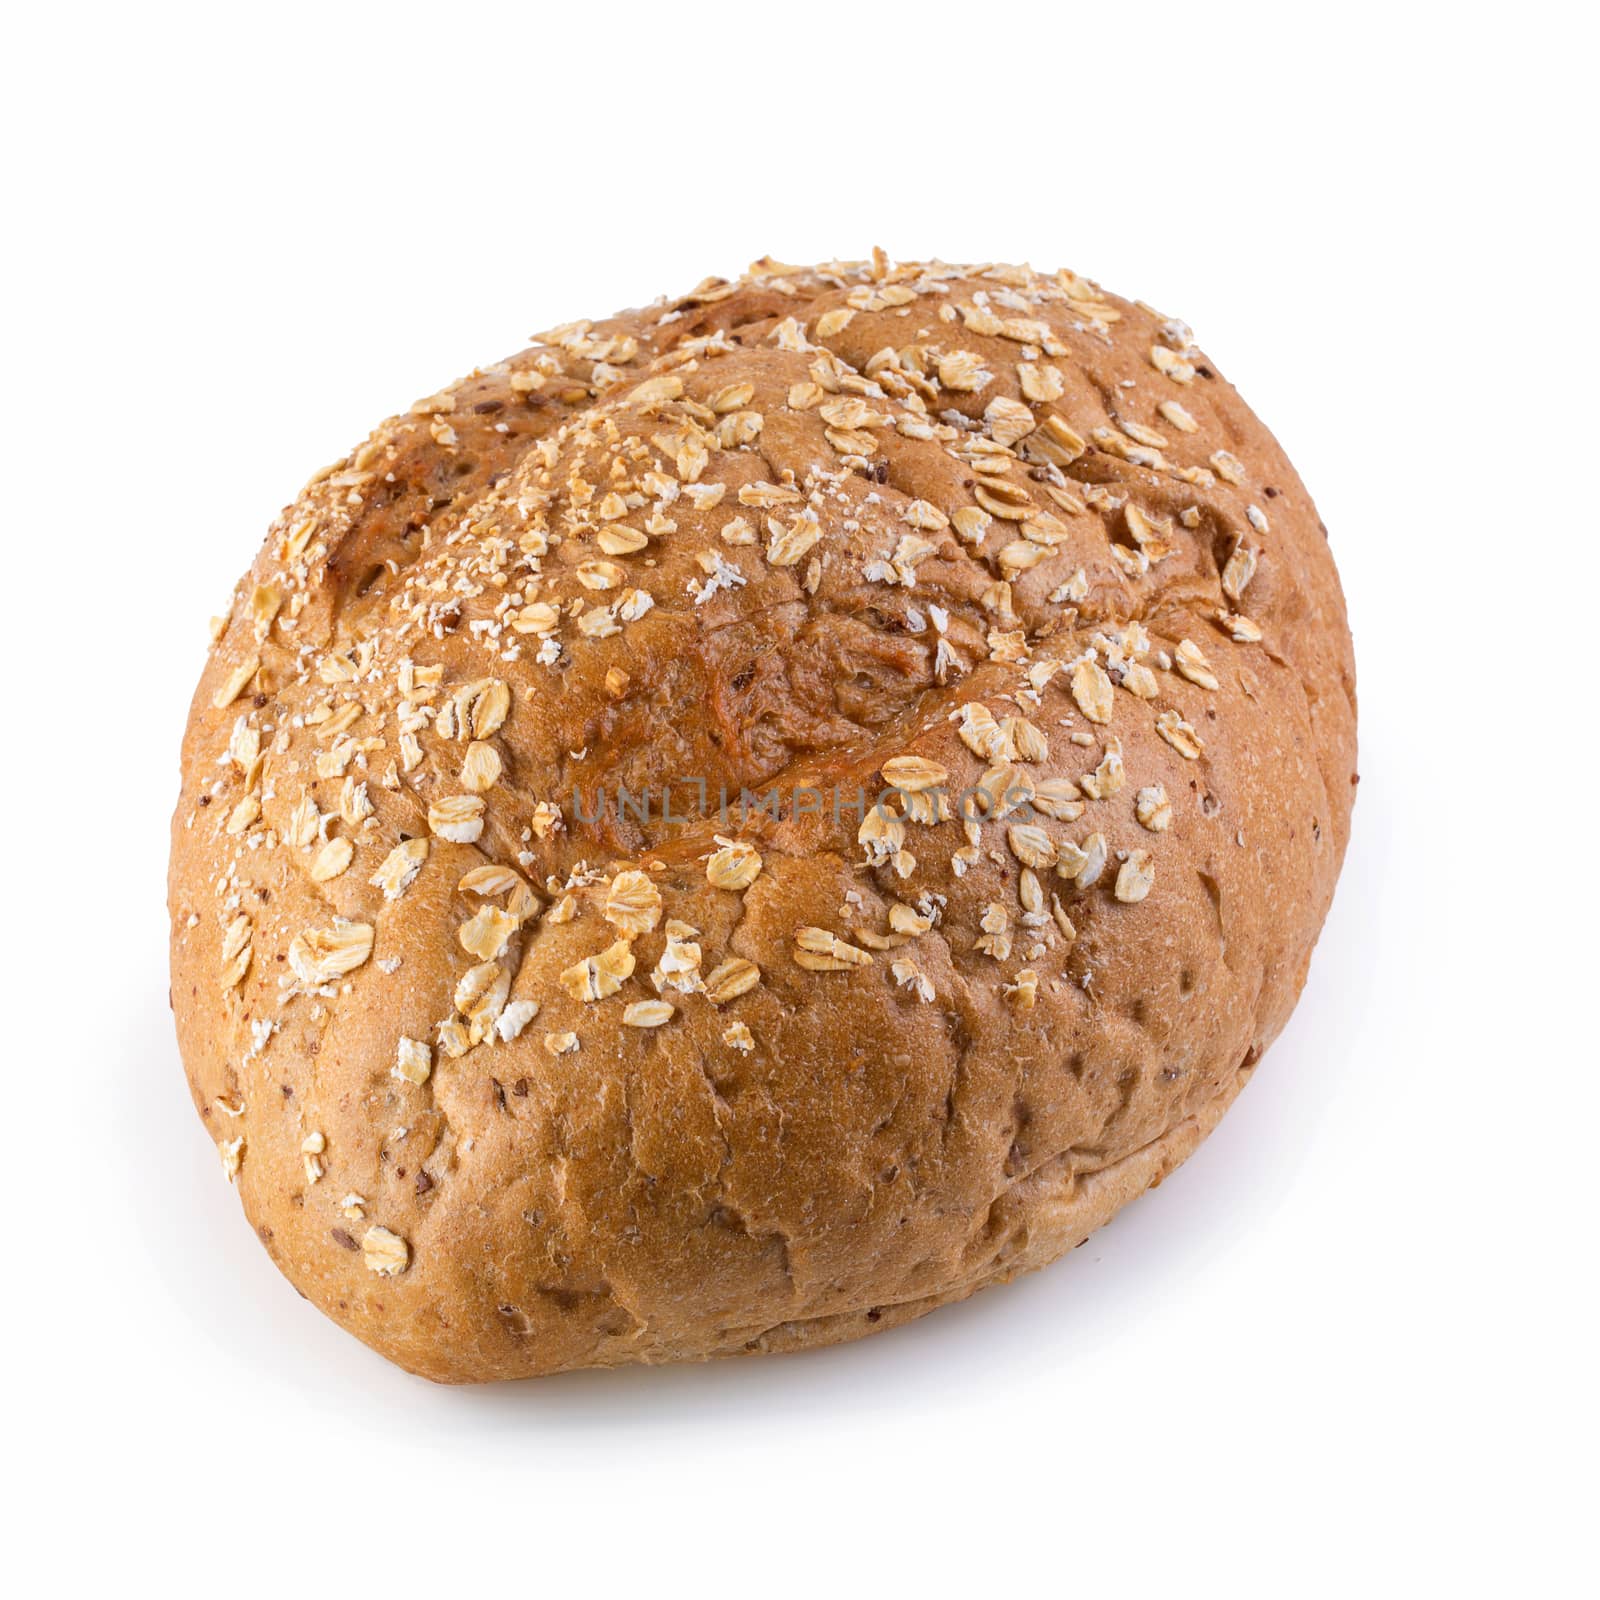 freshly baked bread isolated on white background.